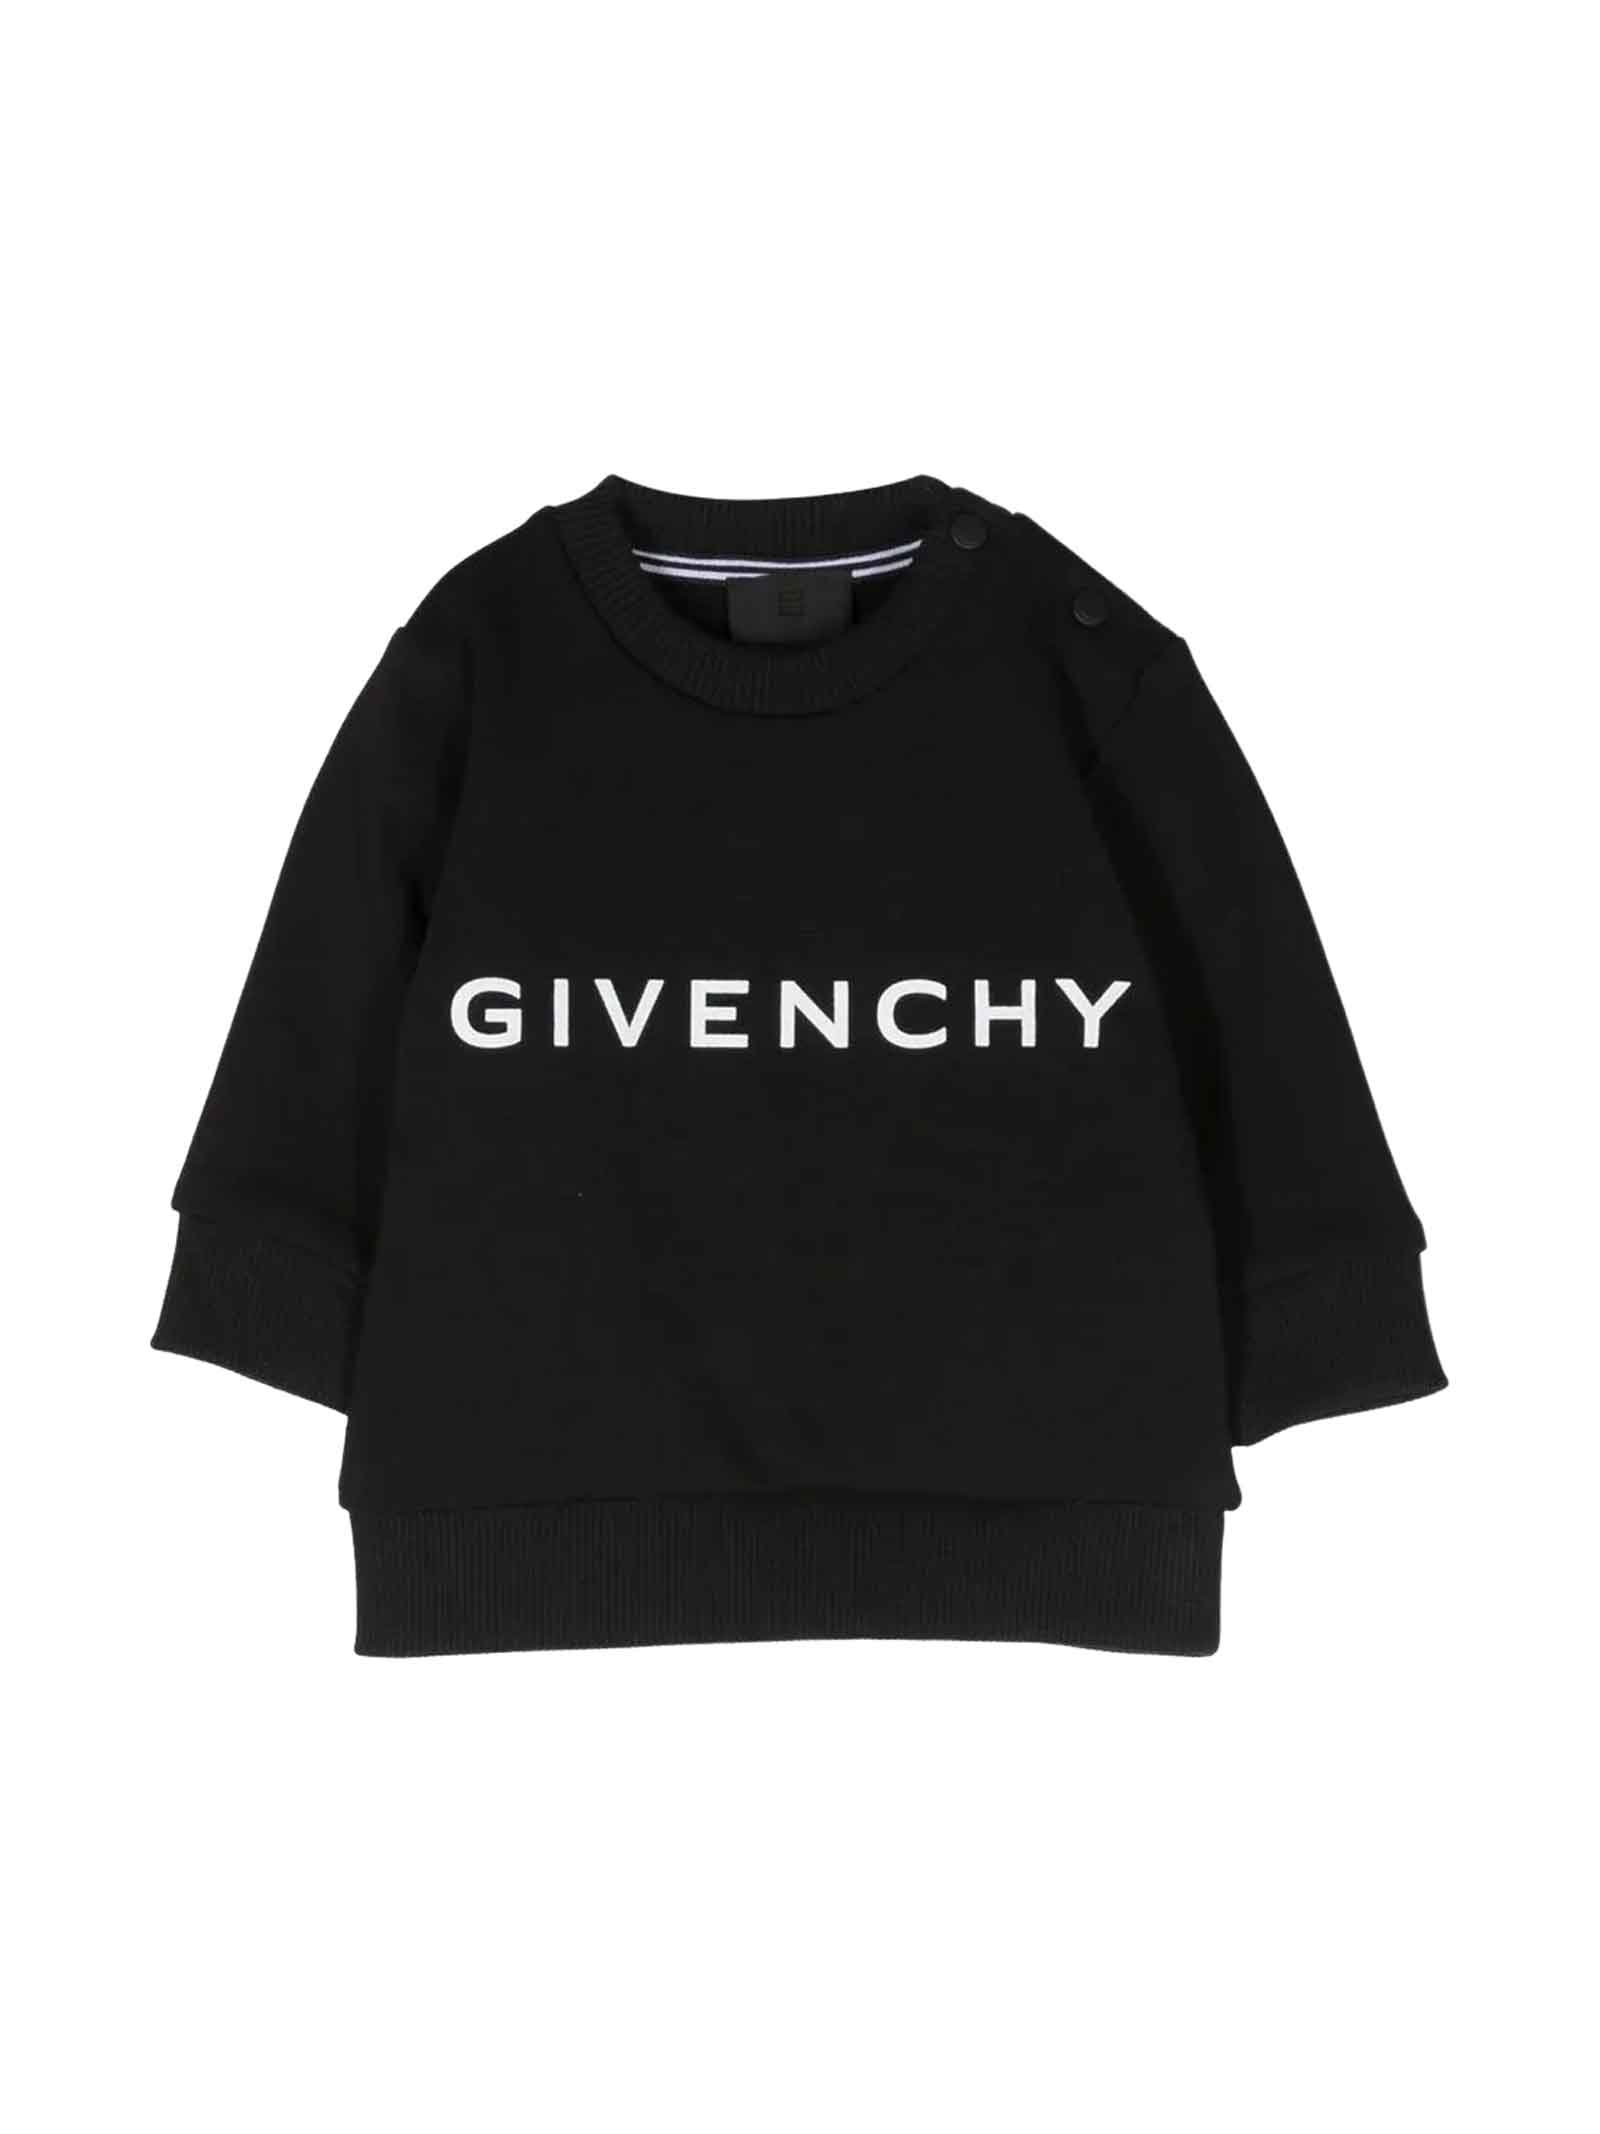 Givenchy Black Sweatshirt Baby Boy